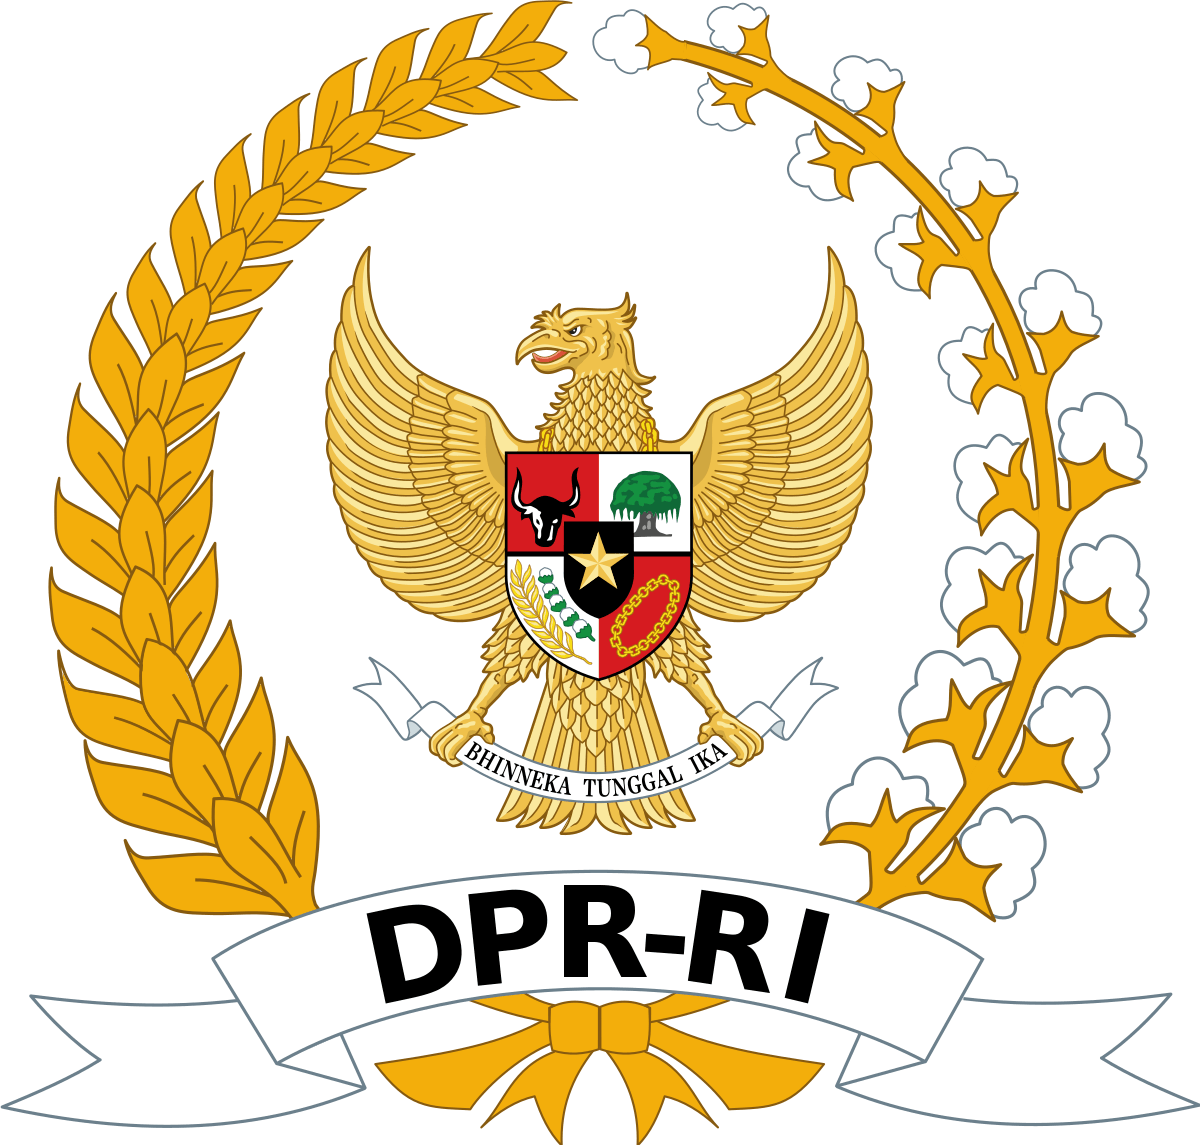 DPR Logo - People's Representative Council